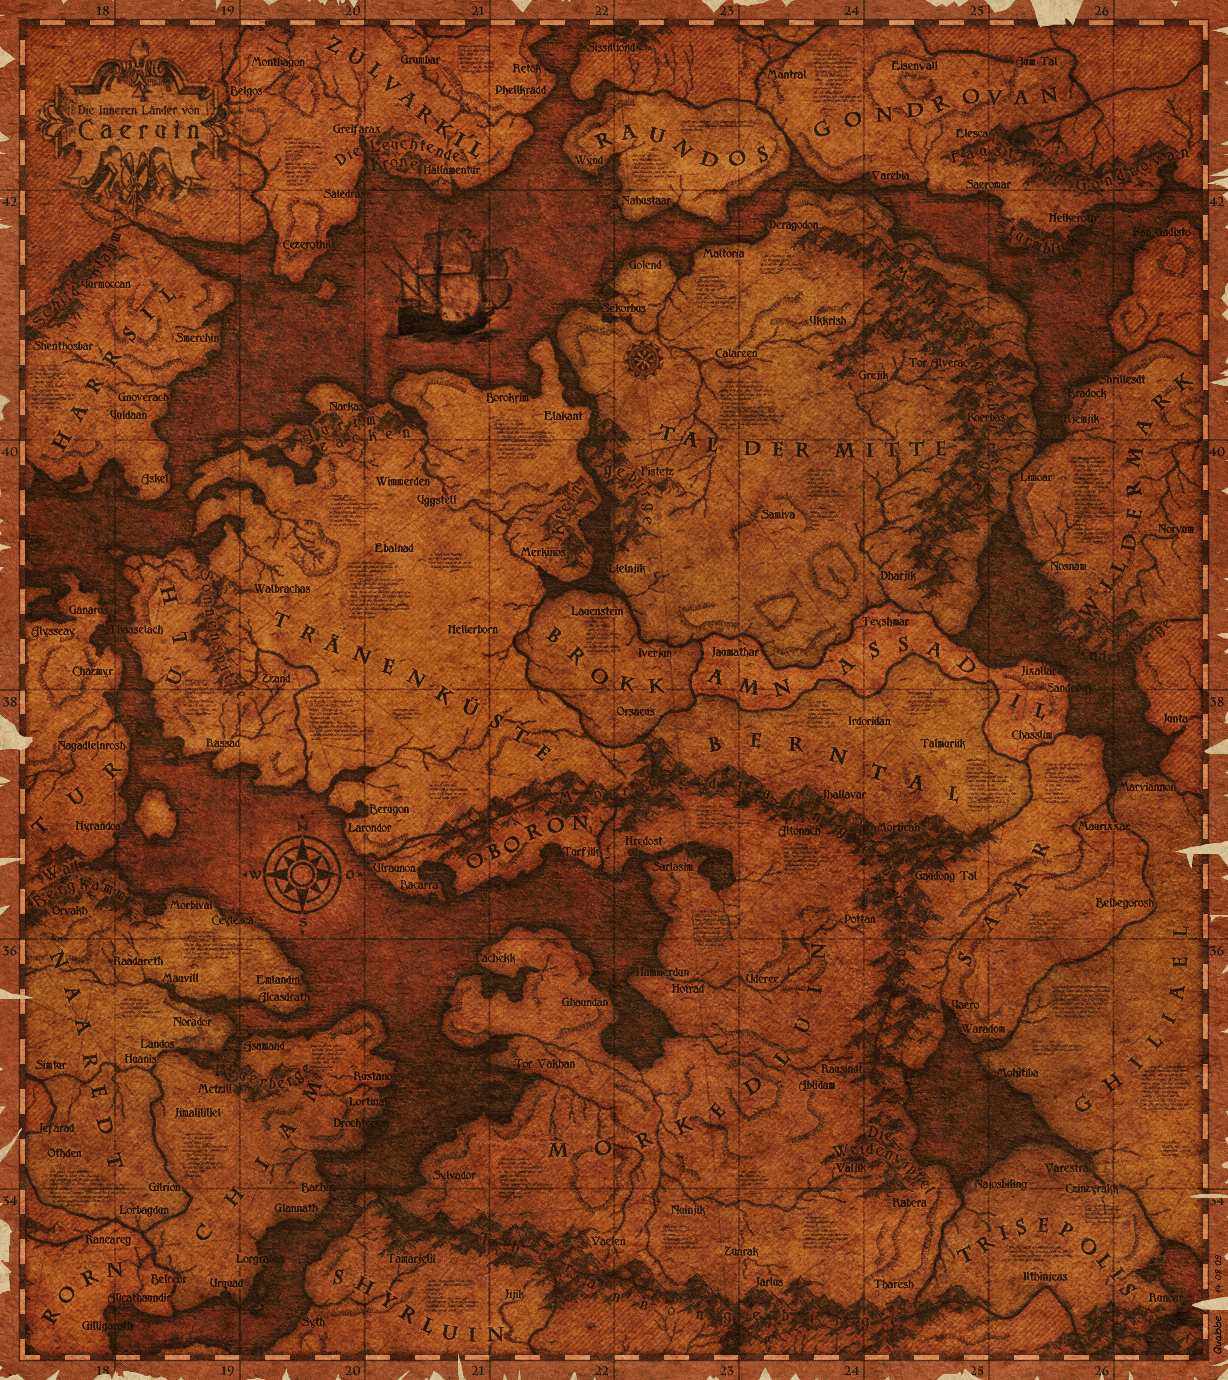 Fantasymap of Caeruin